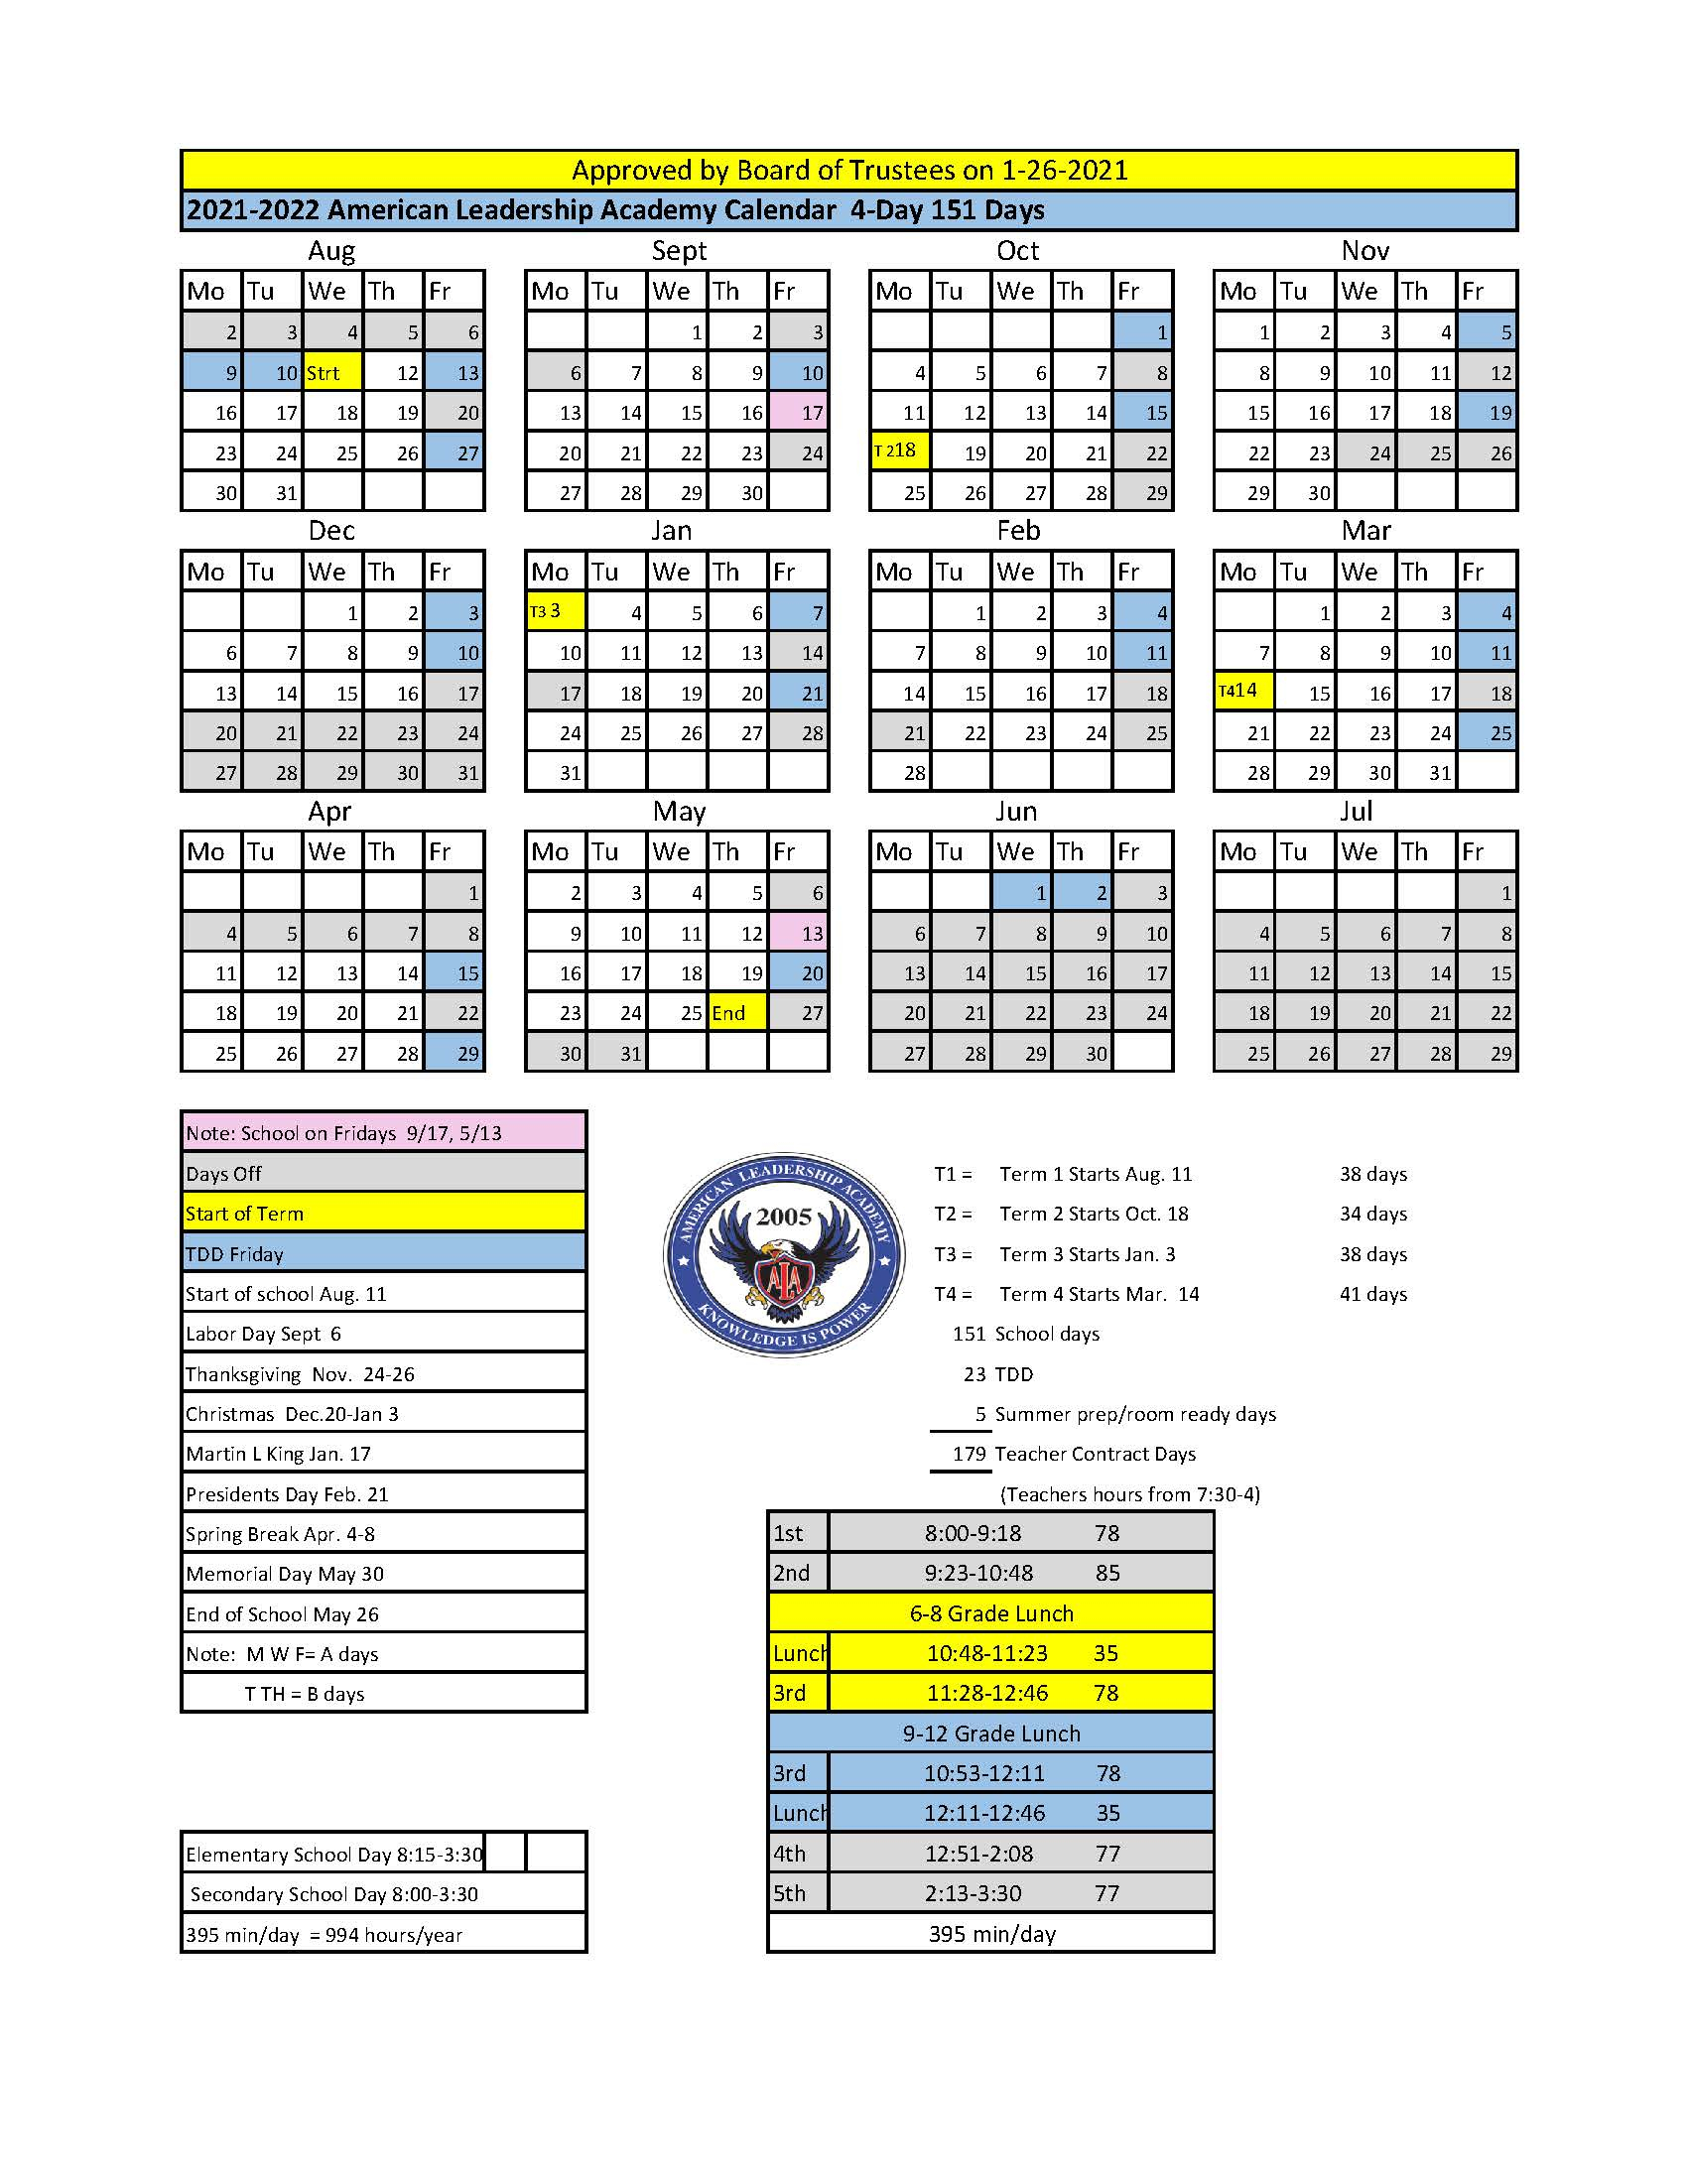 2021-2022 School Calendar | American Leadership Academy